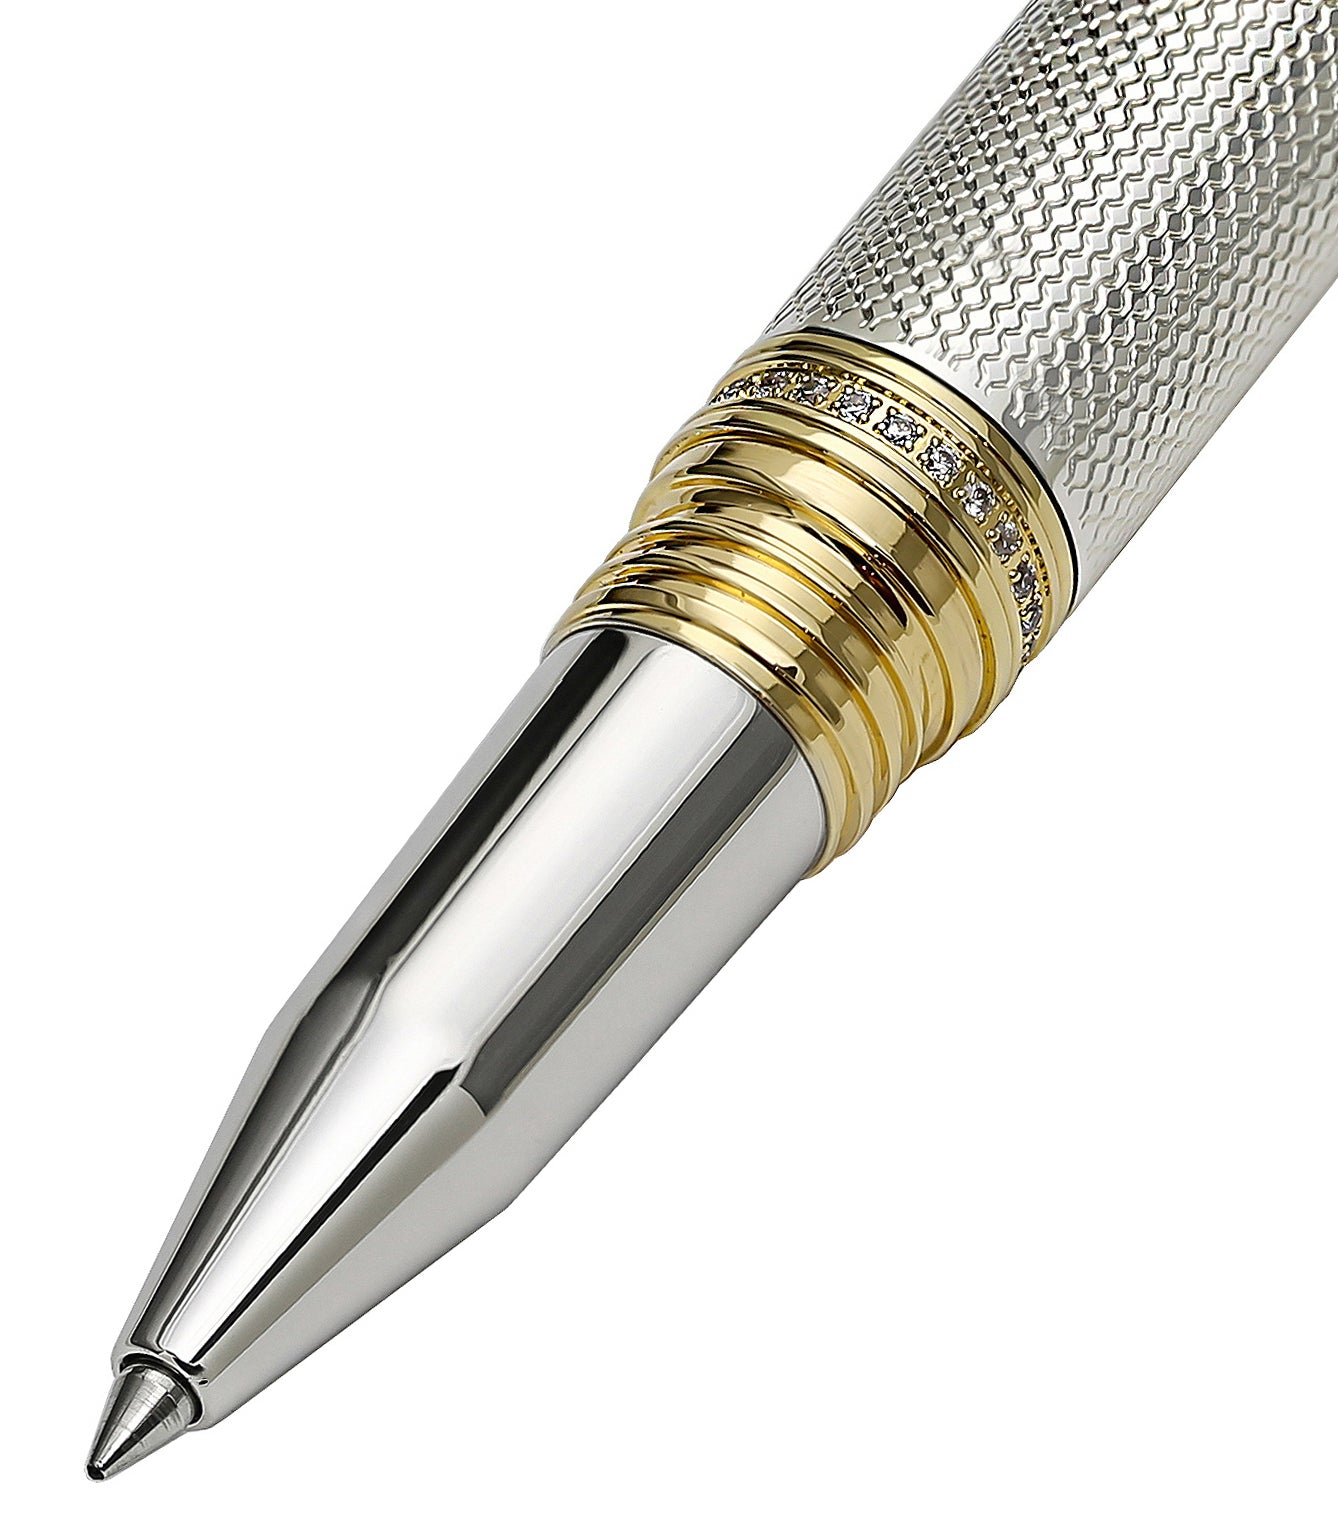 Xezo - Rollerball tip pf the Maestro 925 Sterling Silver R-G rollerball pen